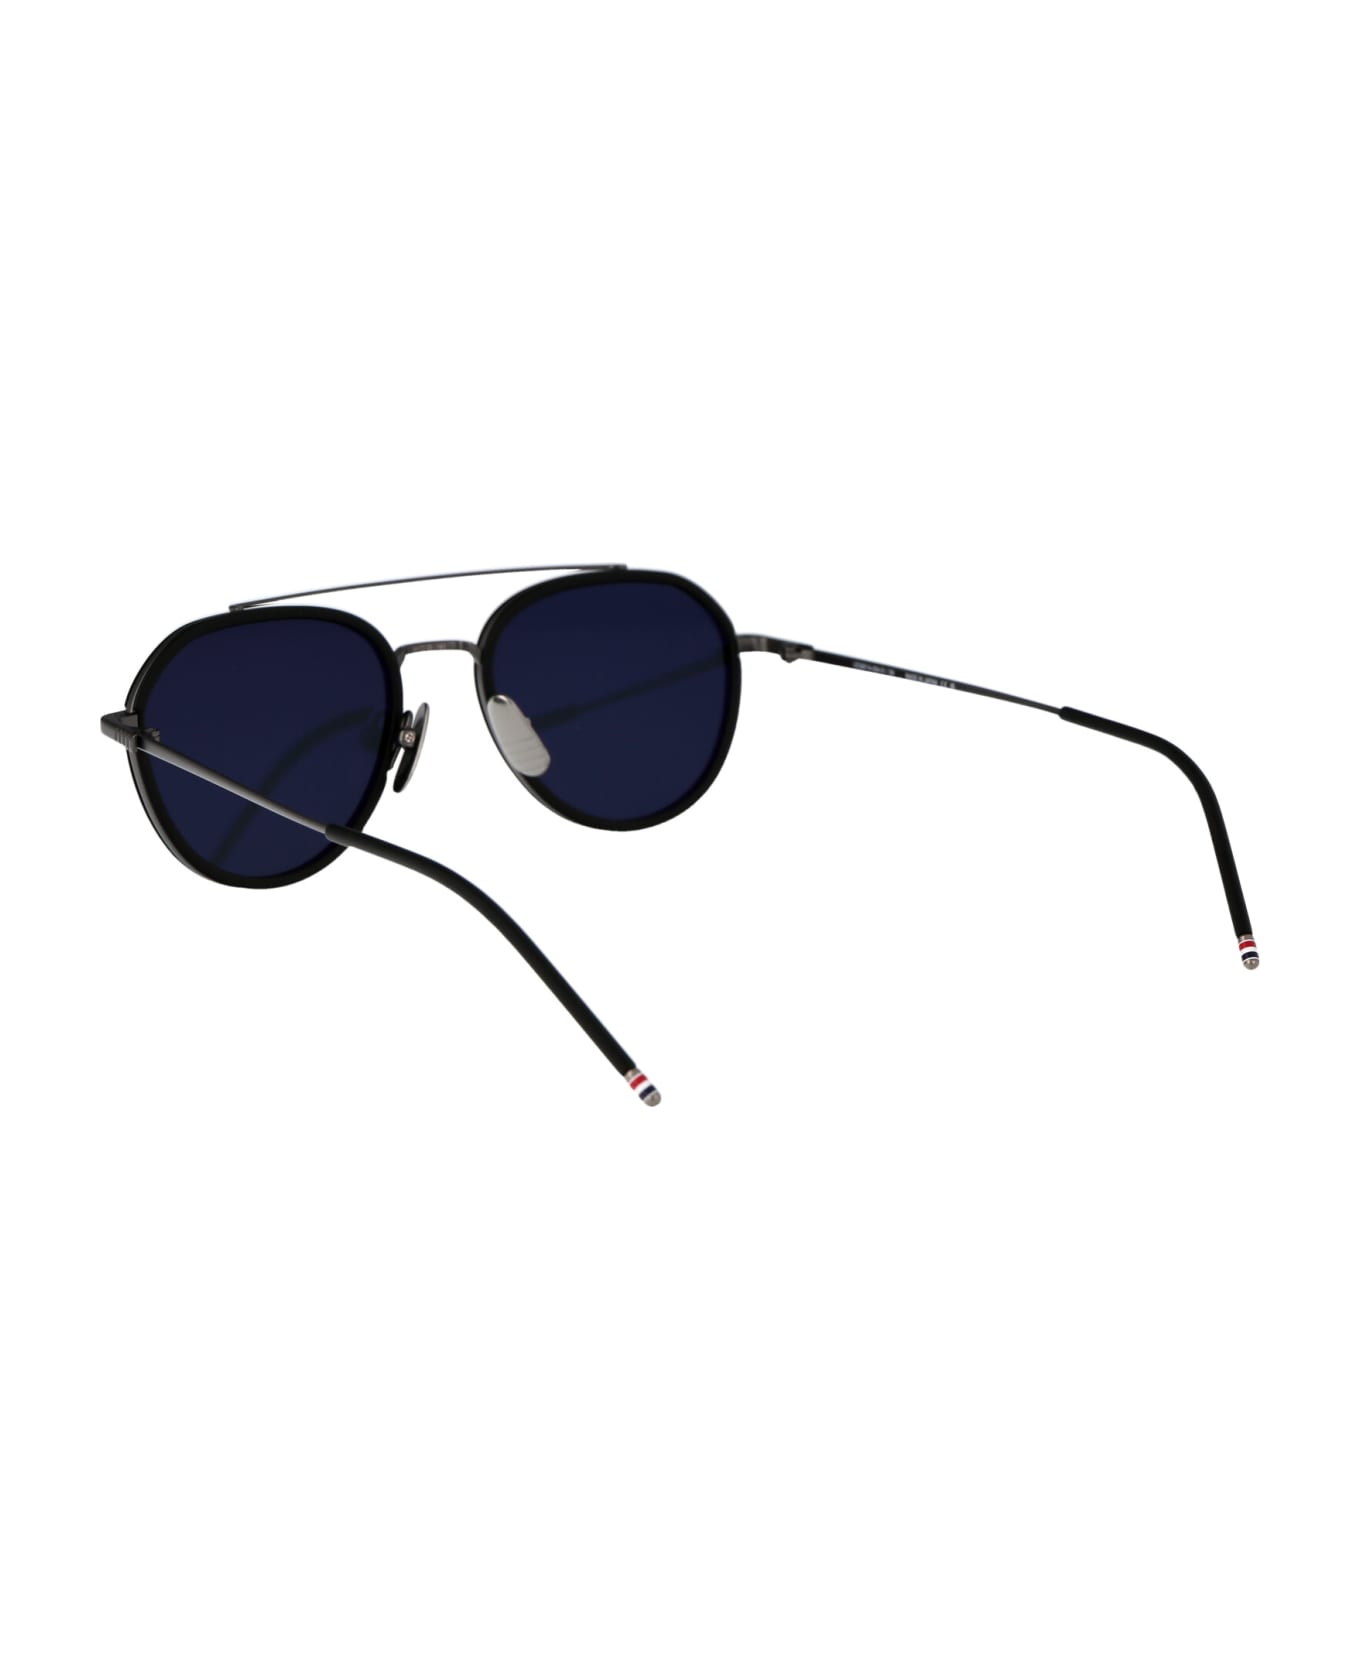 Thom Browne Ues801a-g0003-004-51 Sunglasses - 004 BLACK/CH サングラス